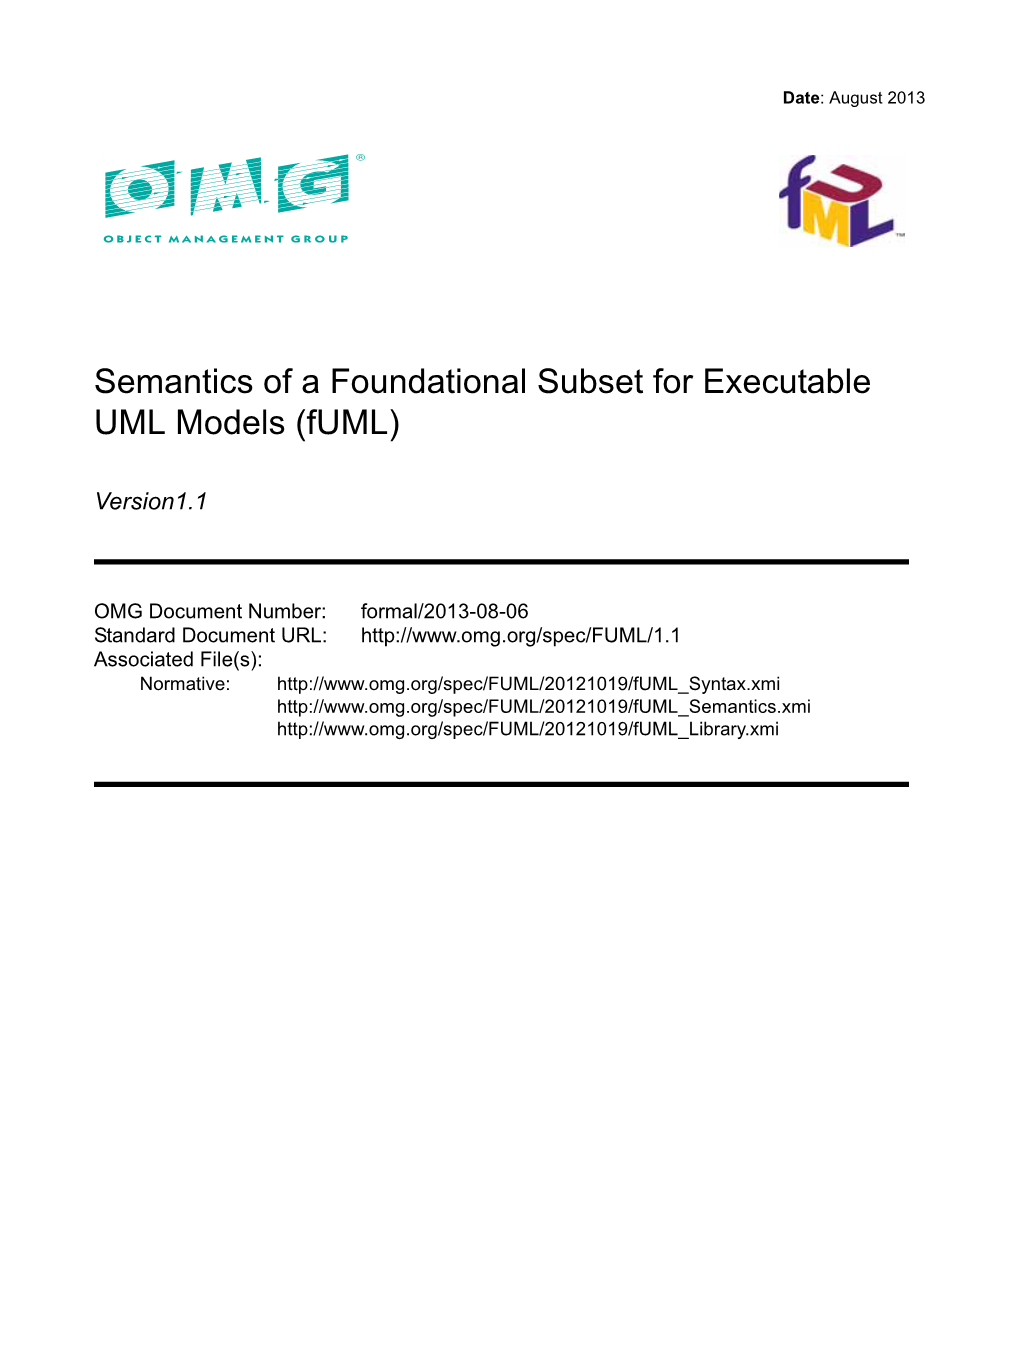 Semantics of a Foundational Subset for Executable UML Models (FUML), V1.1